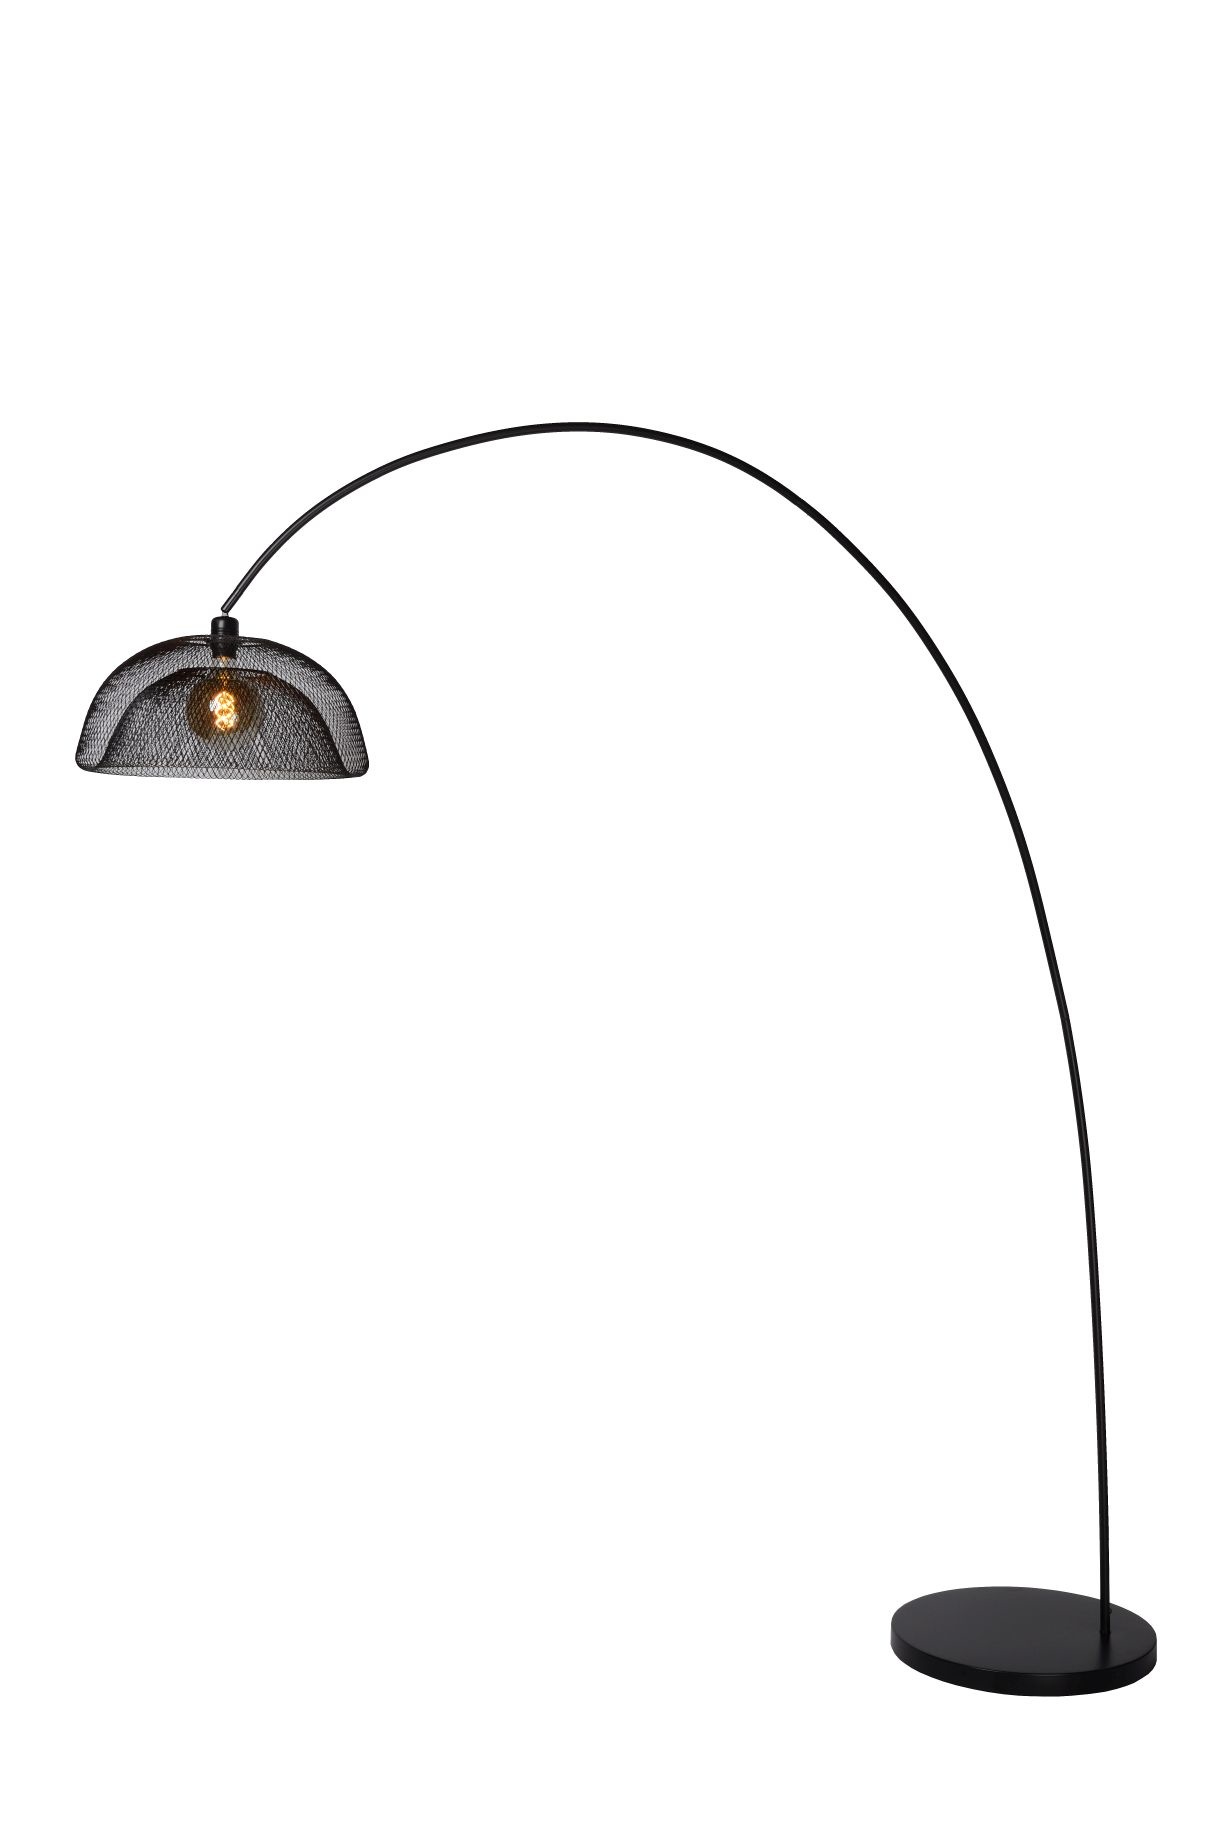 Bezit Spanje Overweldigend Industriële Design Gedraaid Vloerlamp Staande Lamp Gebogen Lamp |  islamiyyat.com